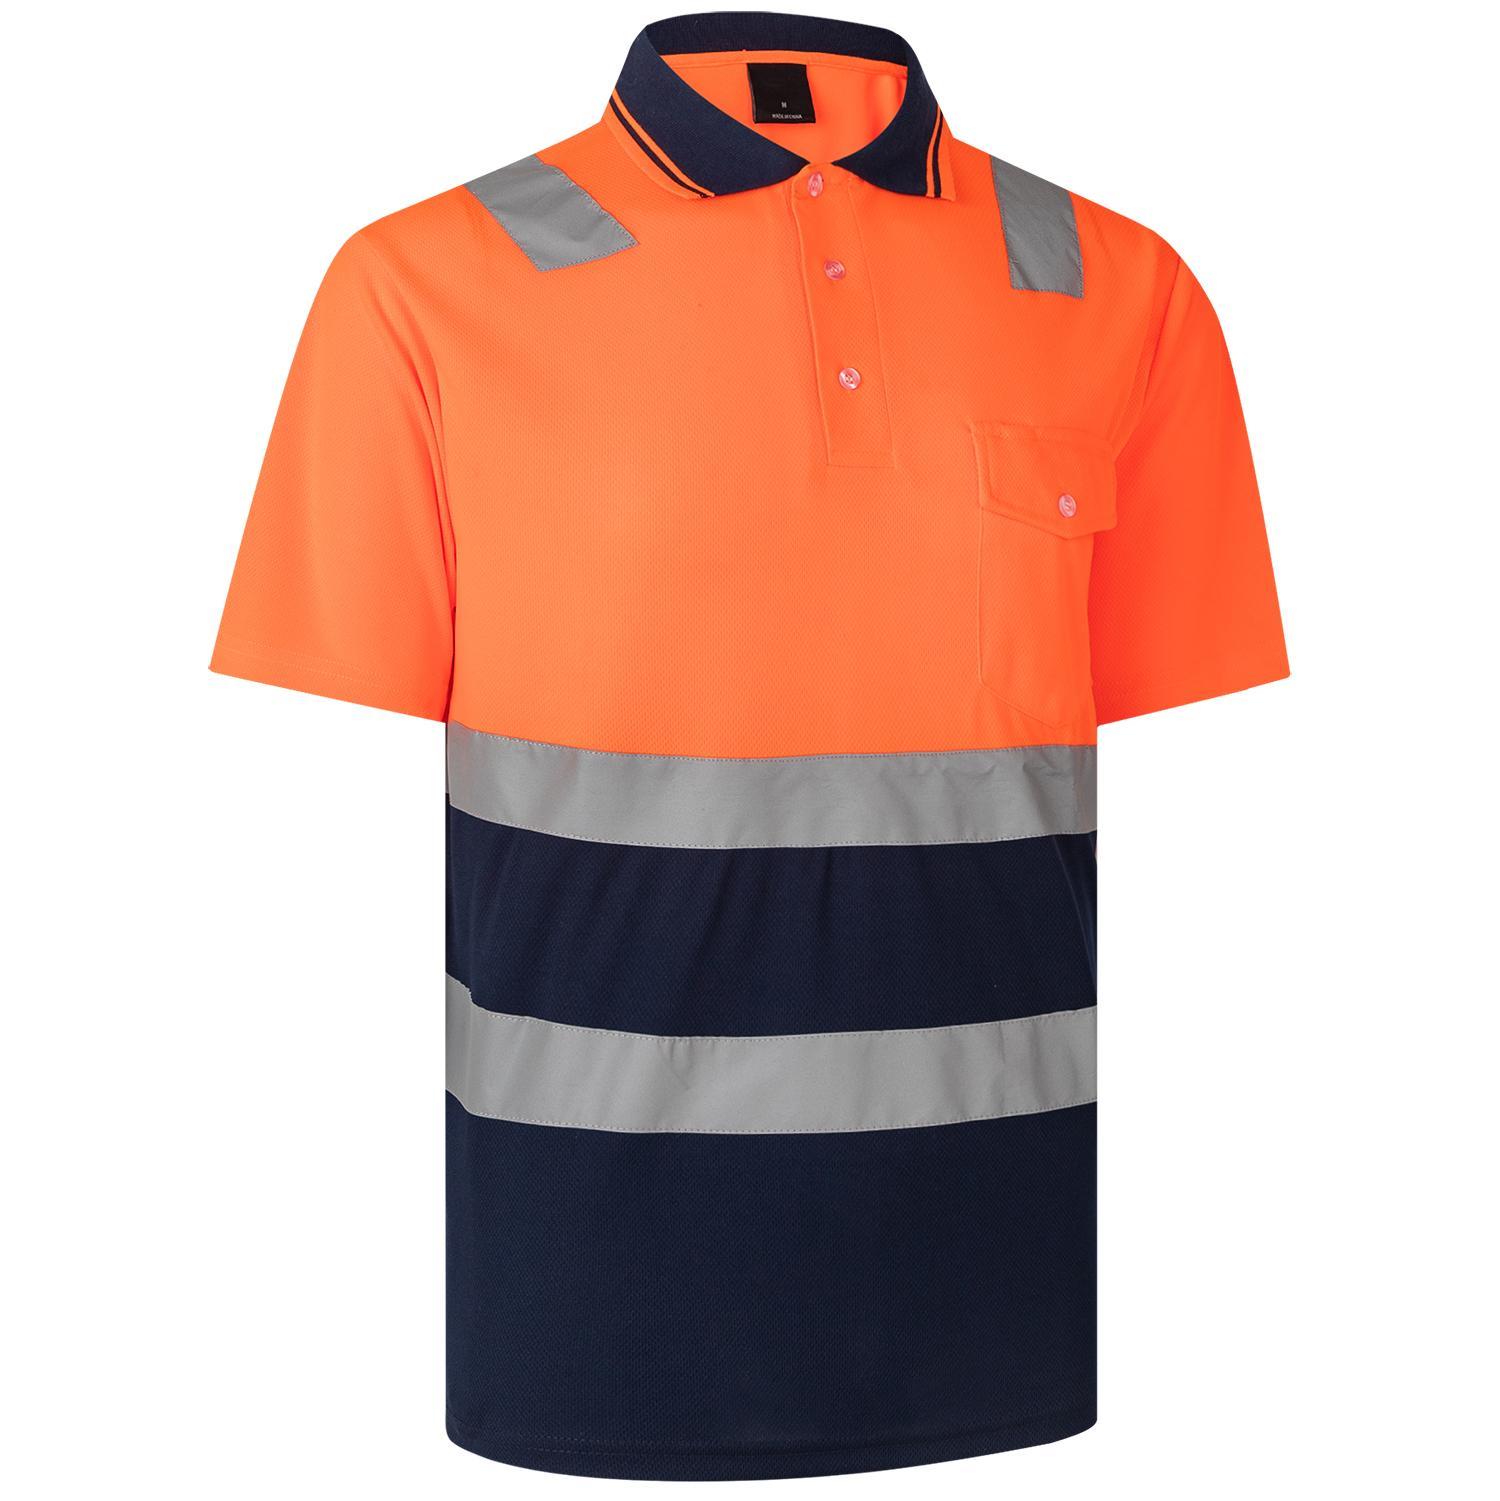 HI VIS Short Sleeve Workwear Shirt w Reflective Tape Cool Dry Safety Polo 2 Tone - Fluoro Orange / Navy, XS